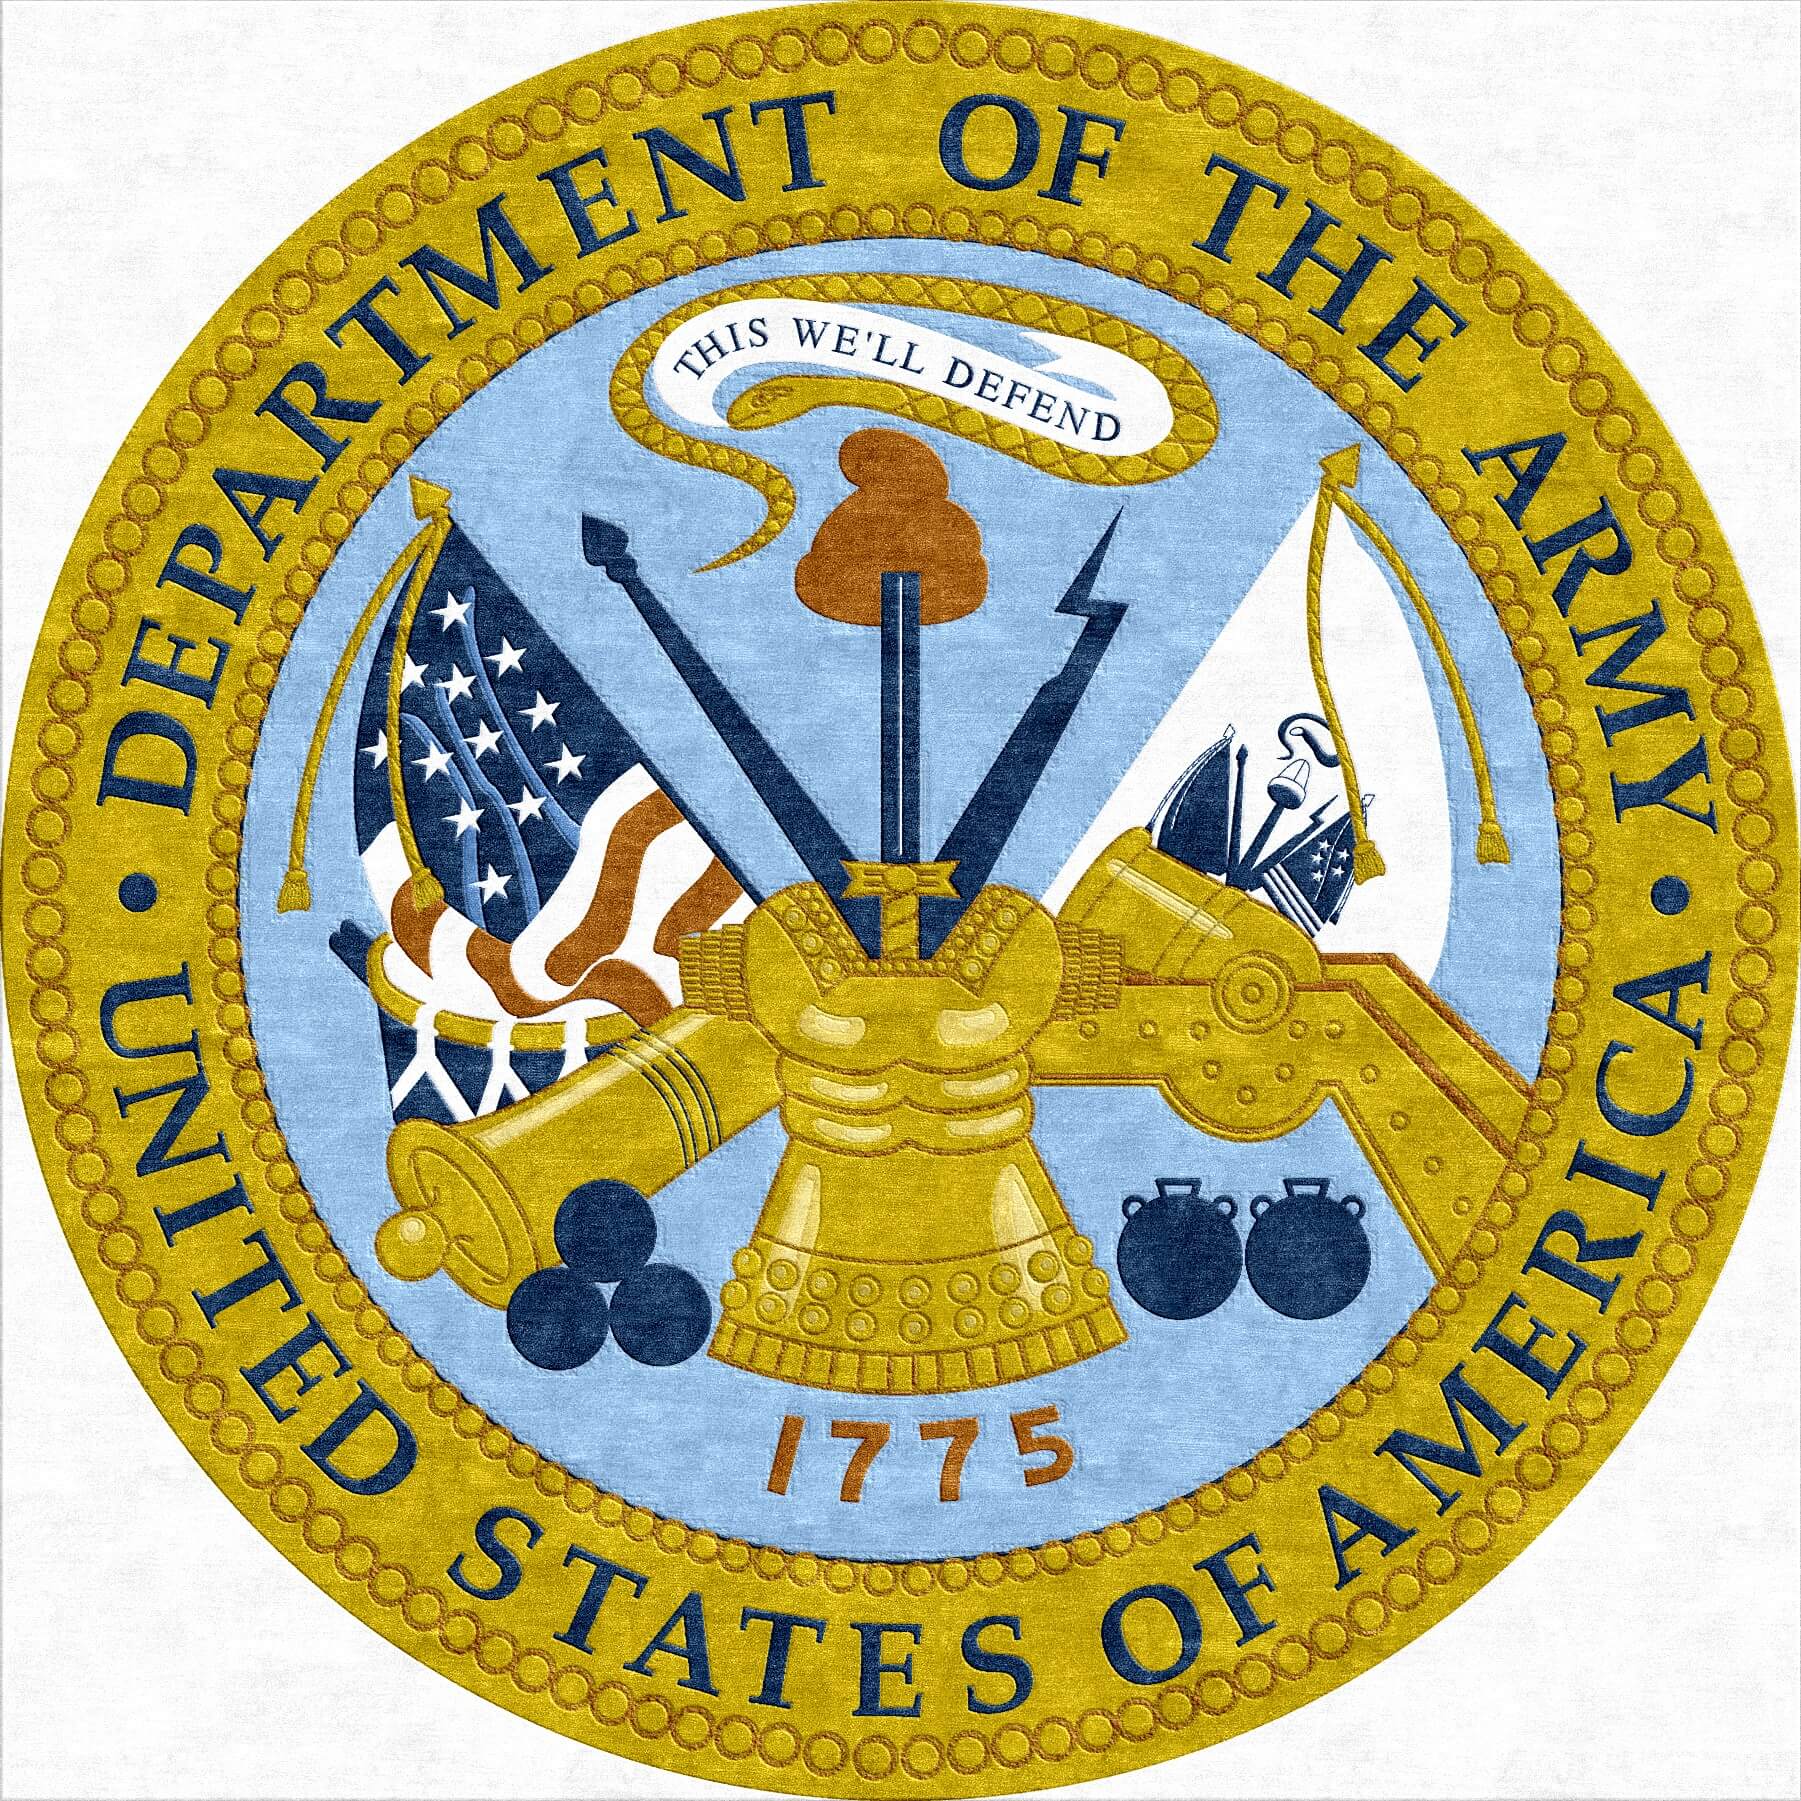 army & navy union civil war token